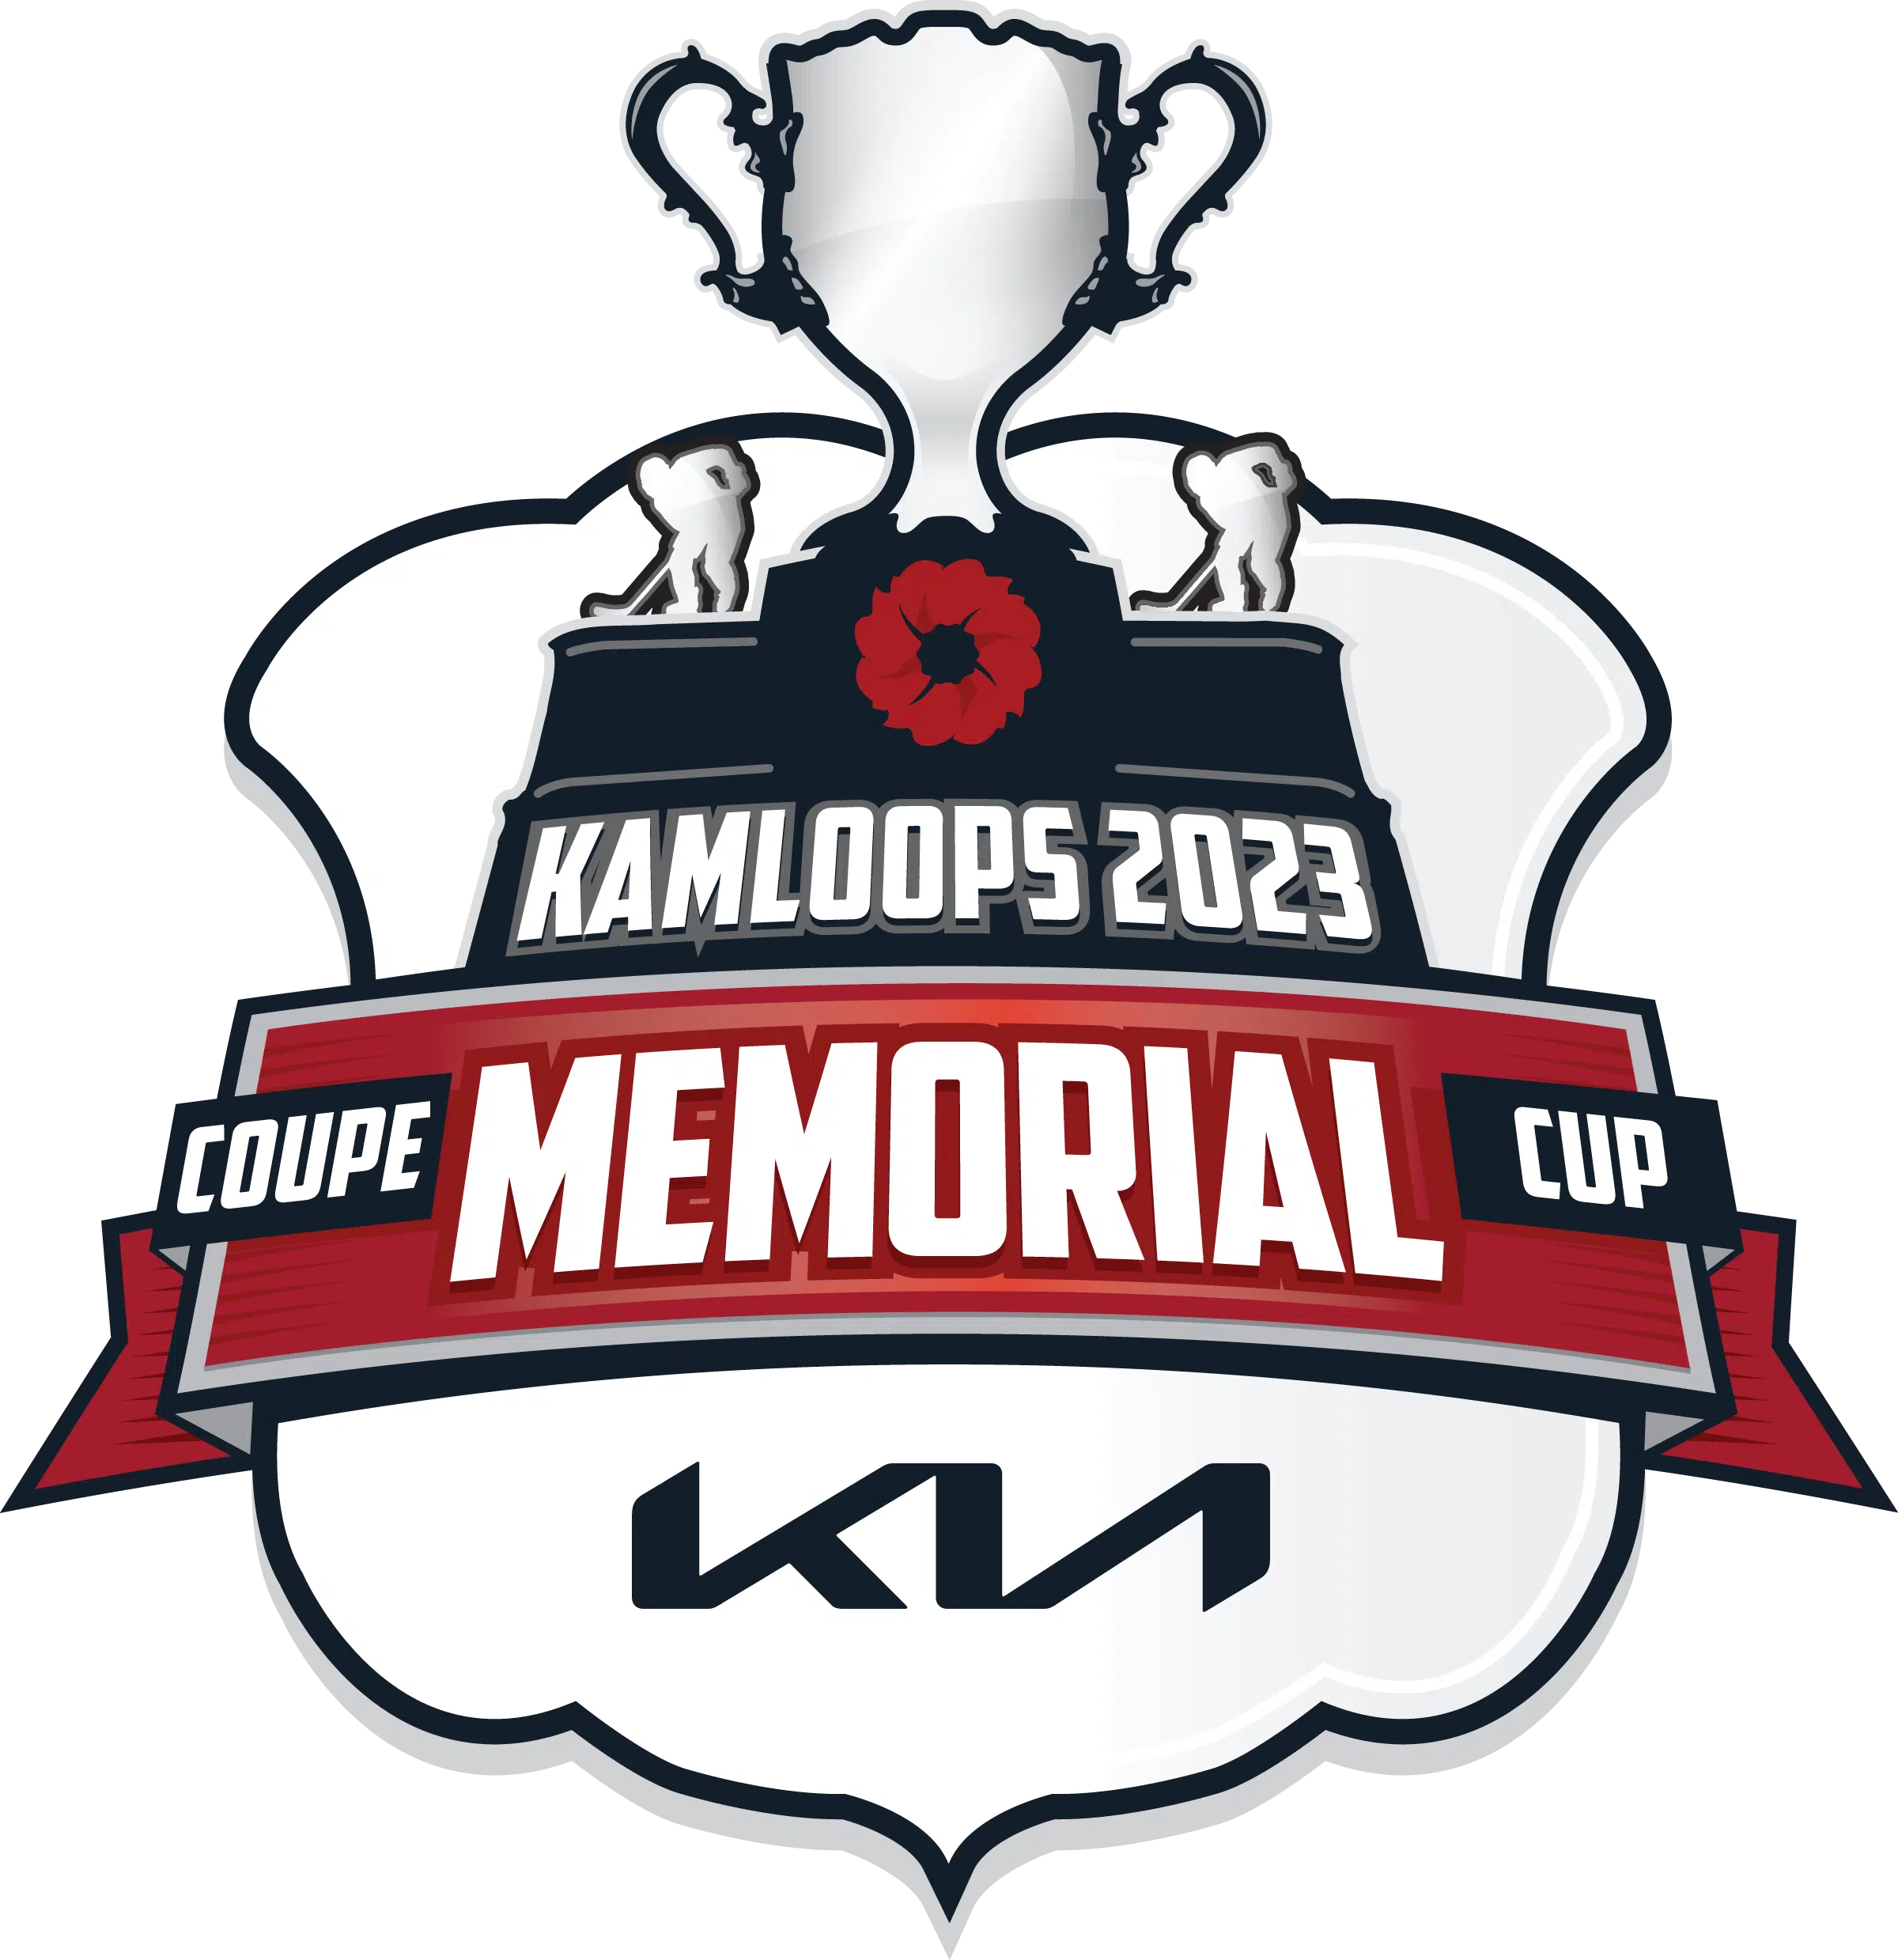 Memorial Cup field set for 2023 tournament in Kamloops Radio NL